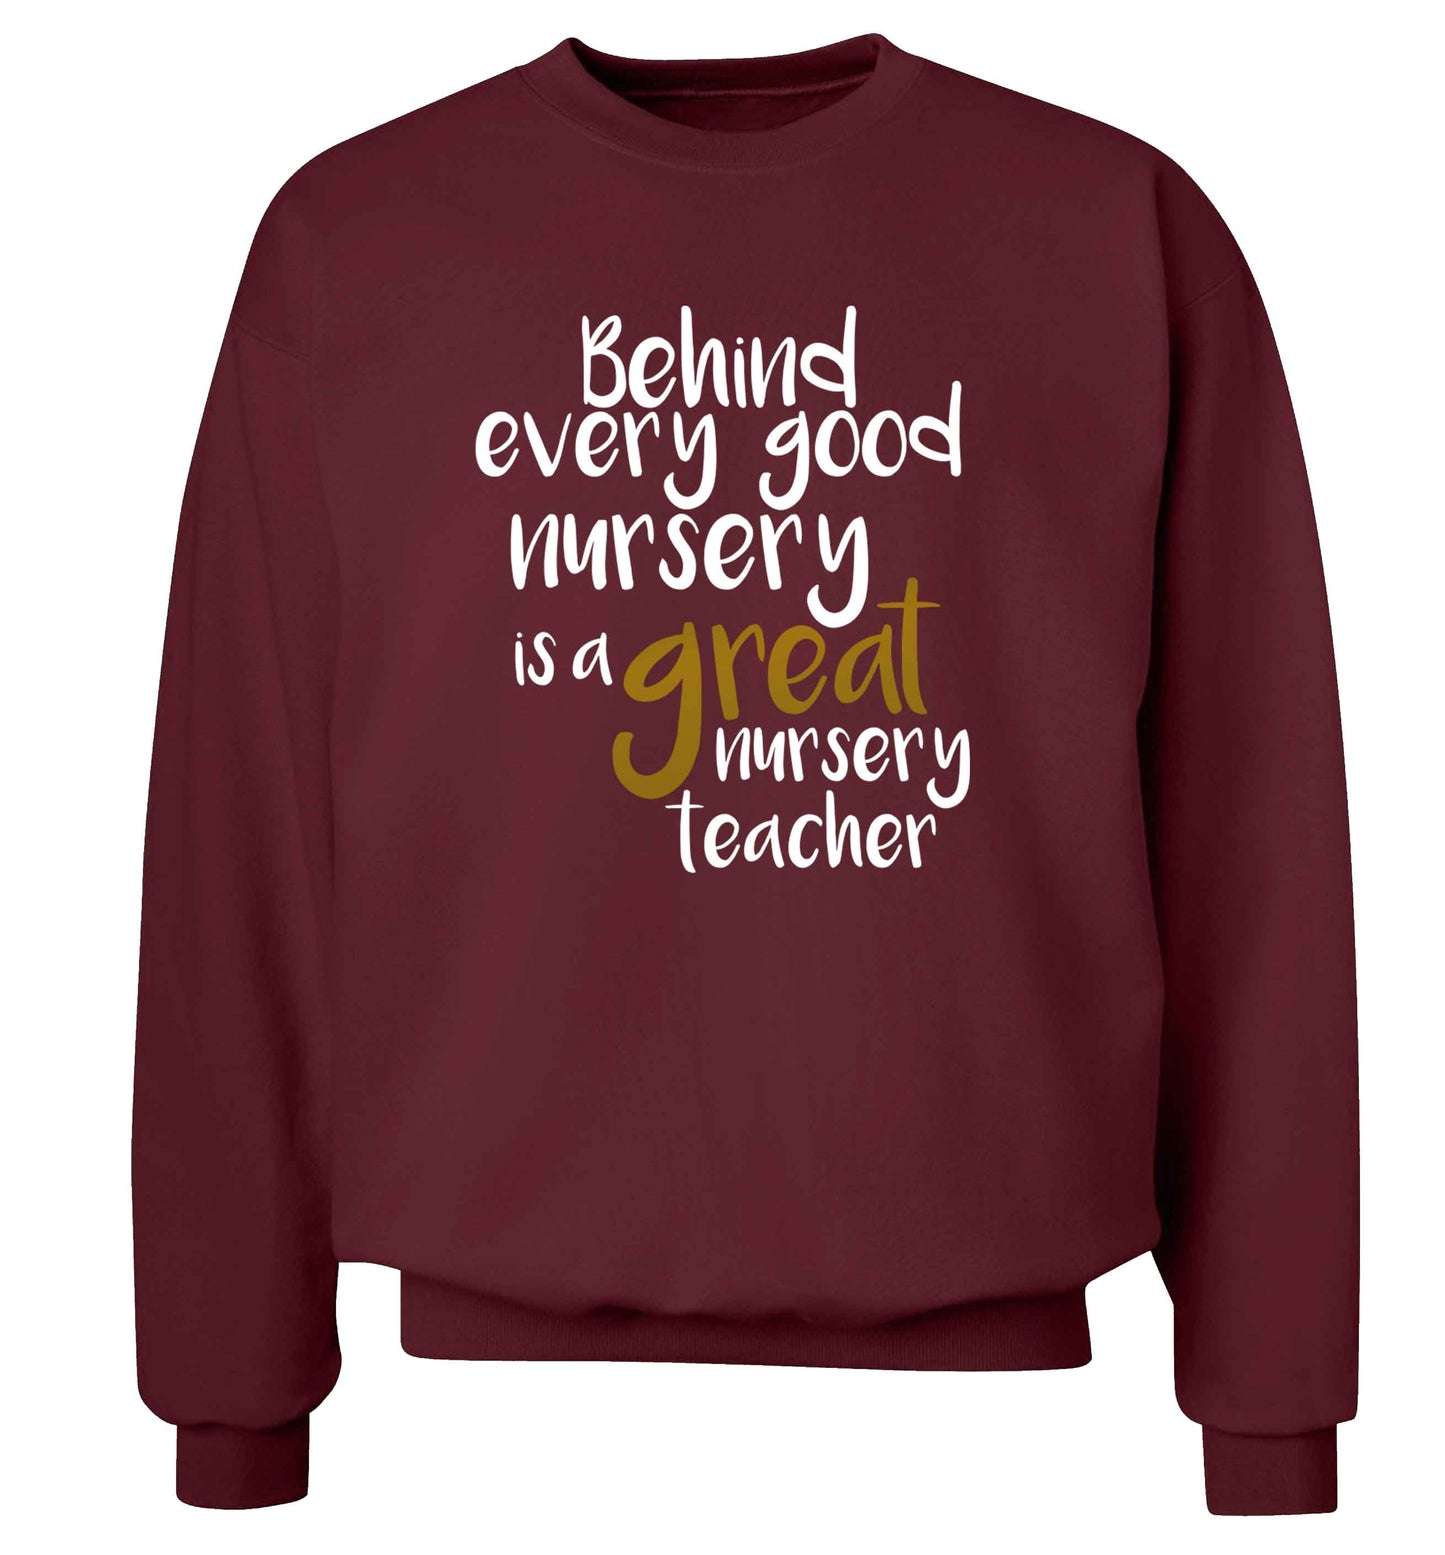 Behind every good nursery is a great nursery teacher Adult's unisex maroon Sweater 2XL